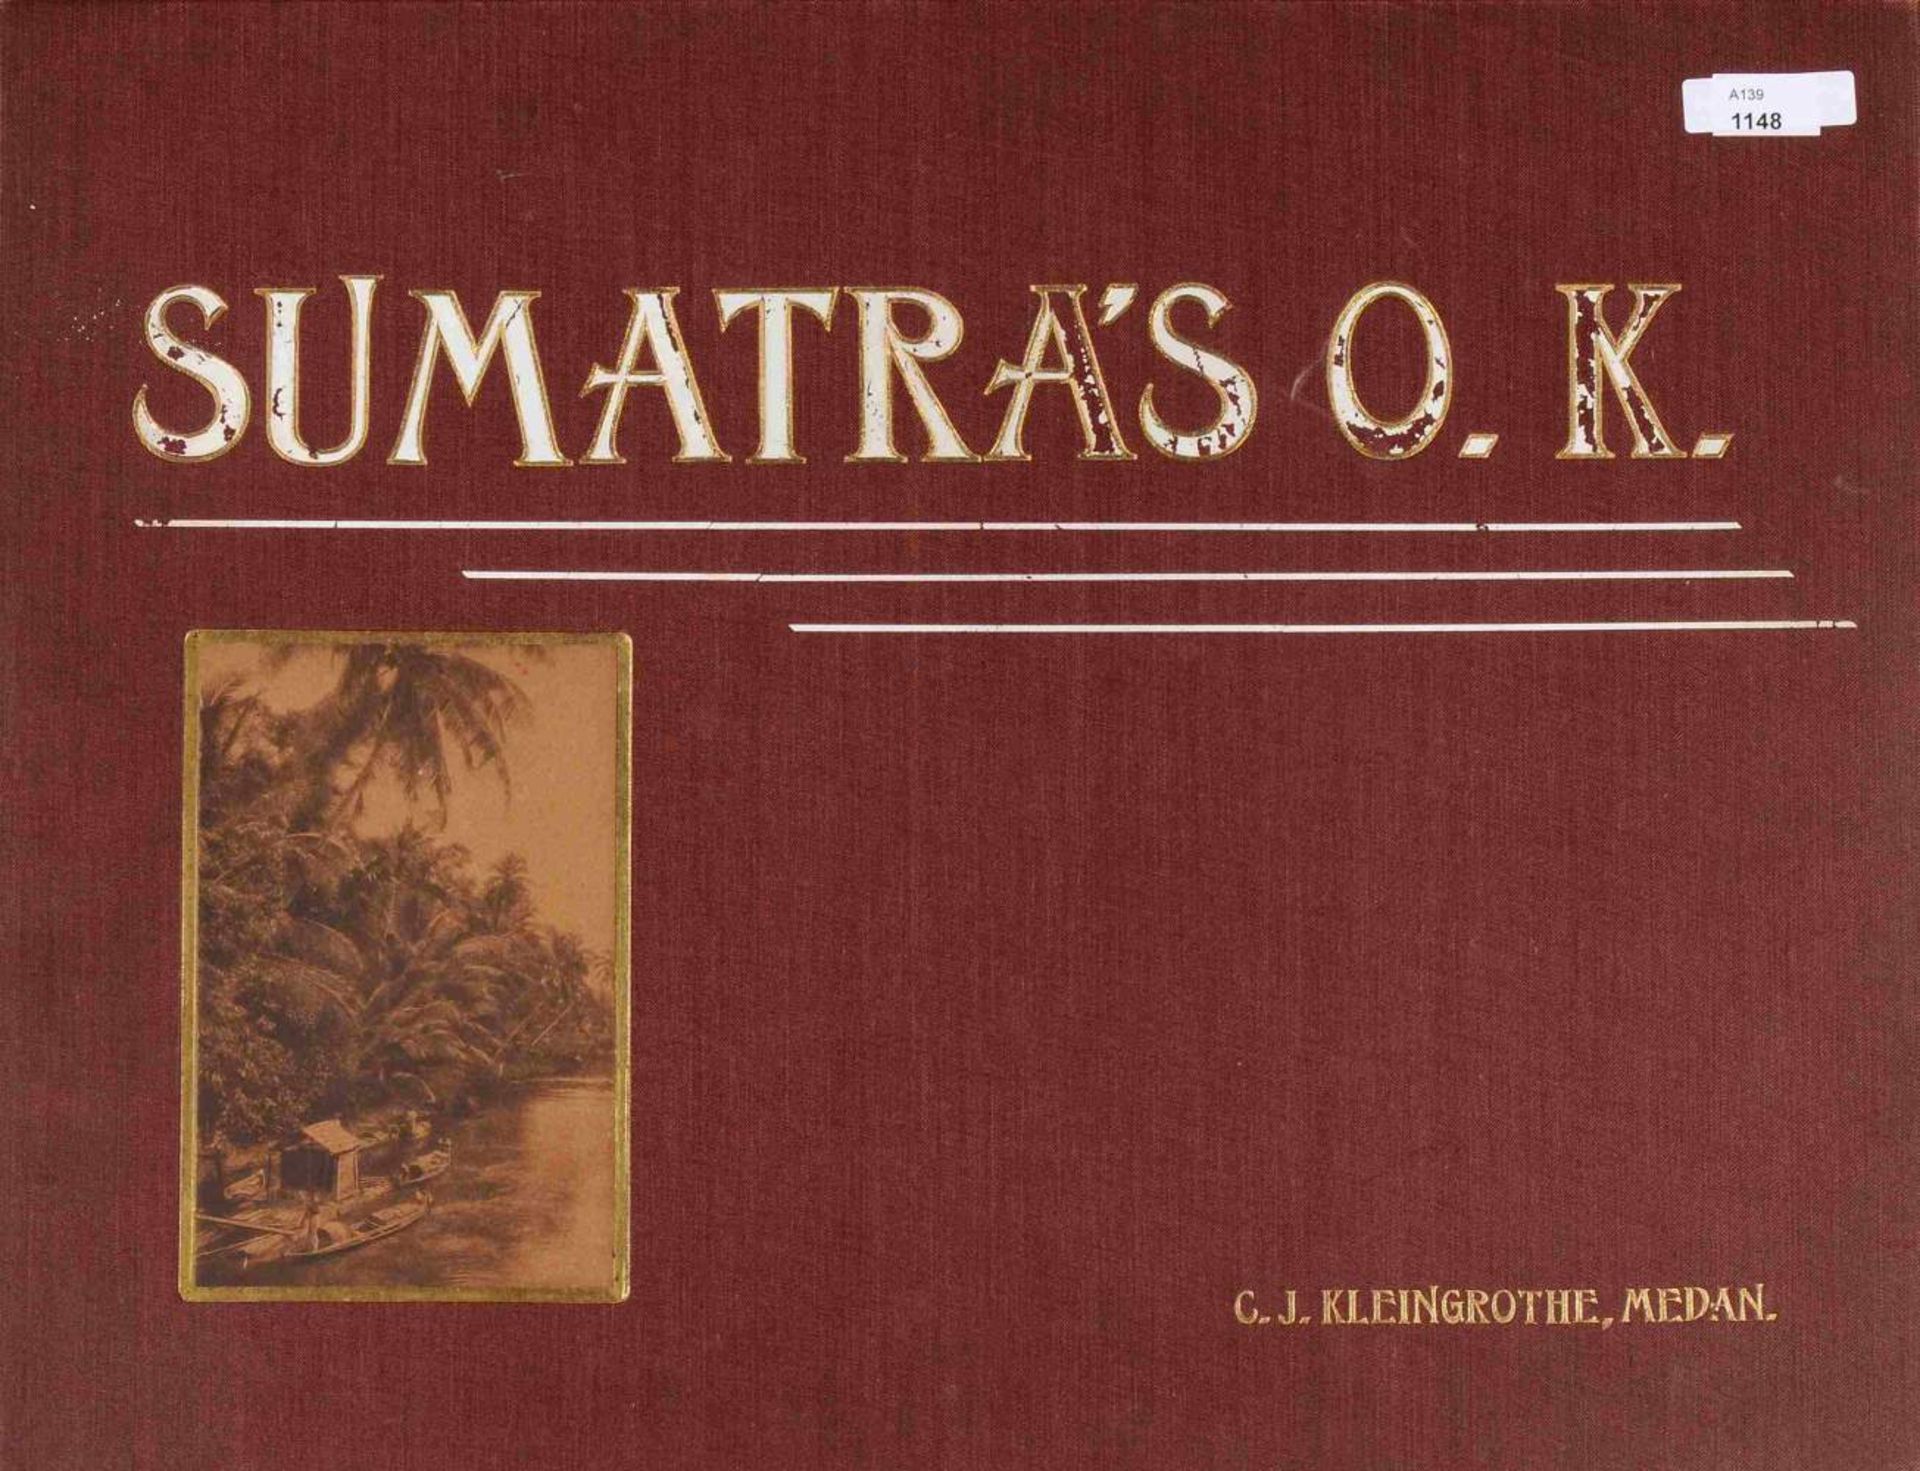 C.J. Kleingrothe, "Sumatra's O.K."Hrsg.: Medan-Deli, um 1910. Bilder von Sumatras Ostküste.